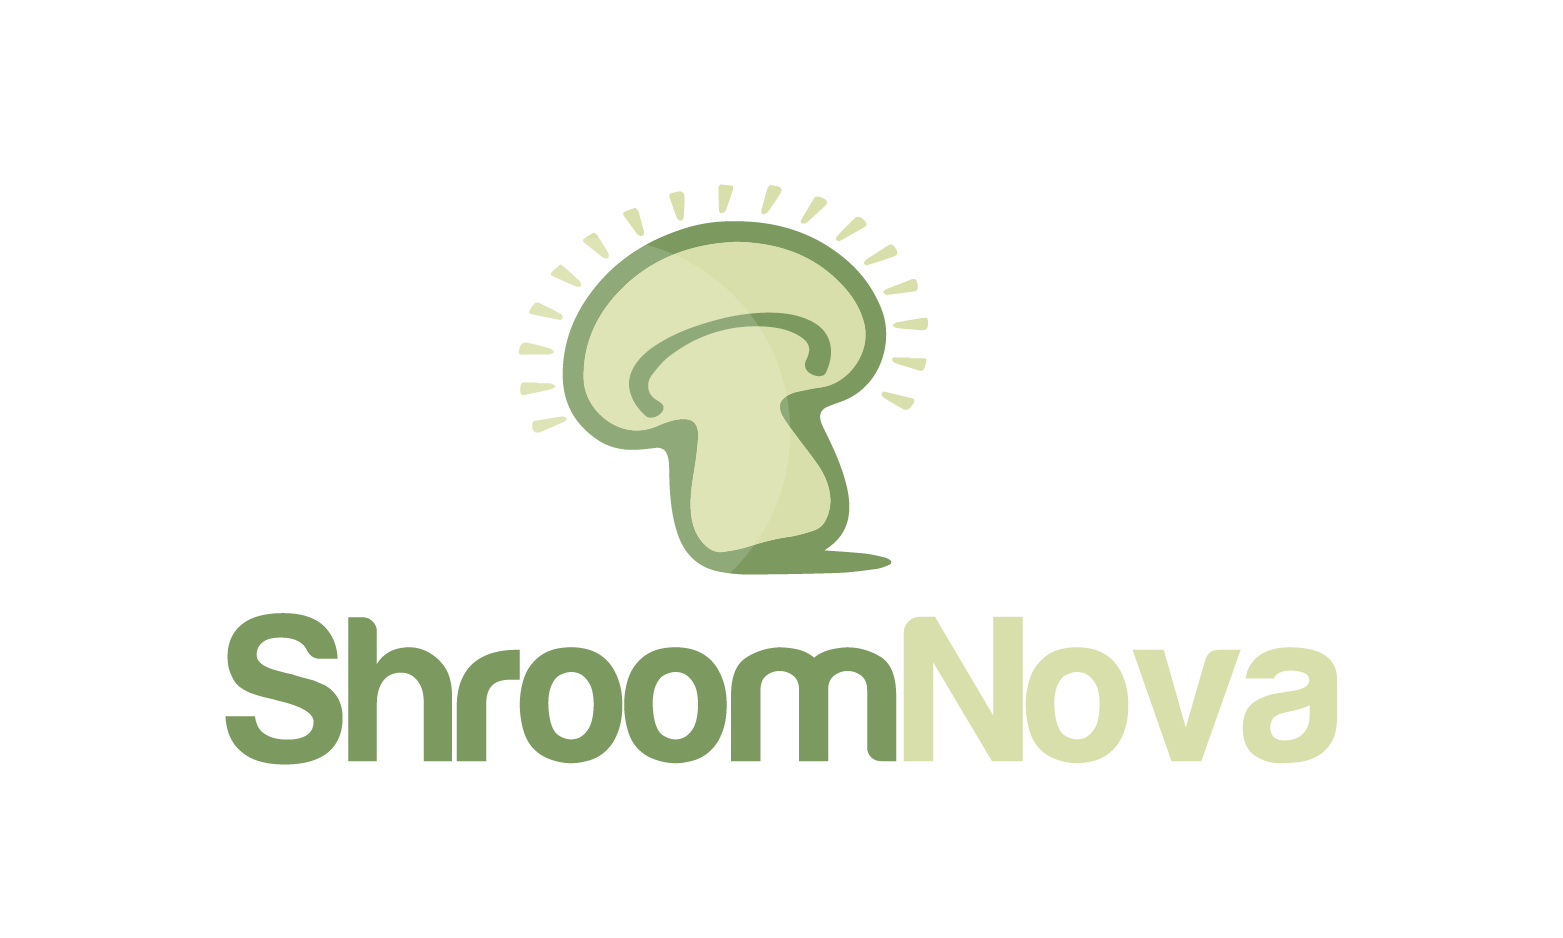 ShroomNova.com - Creative brandable domain for sale